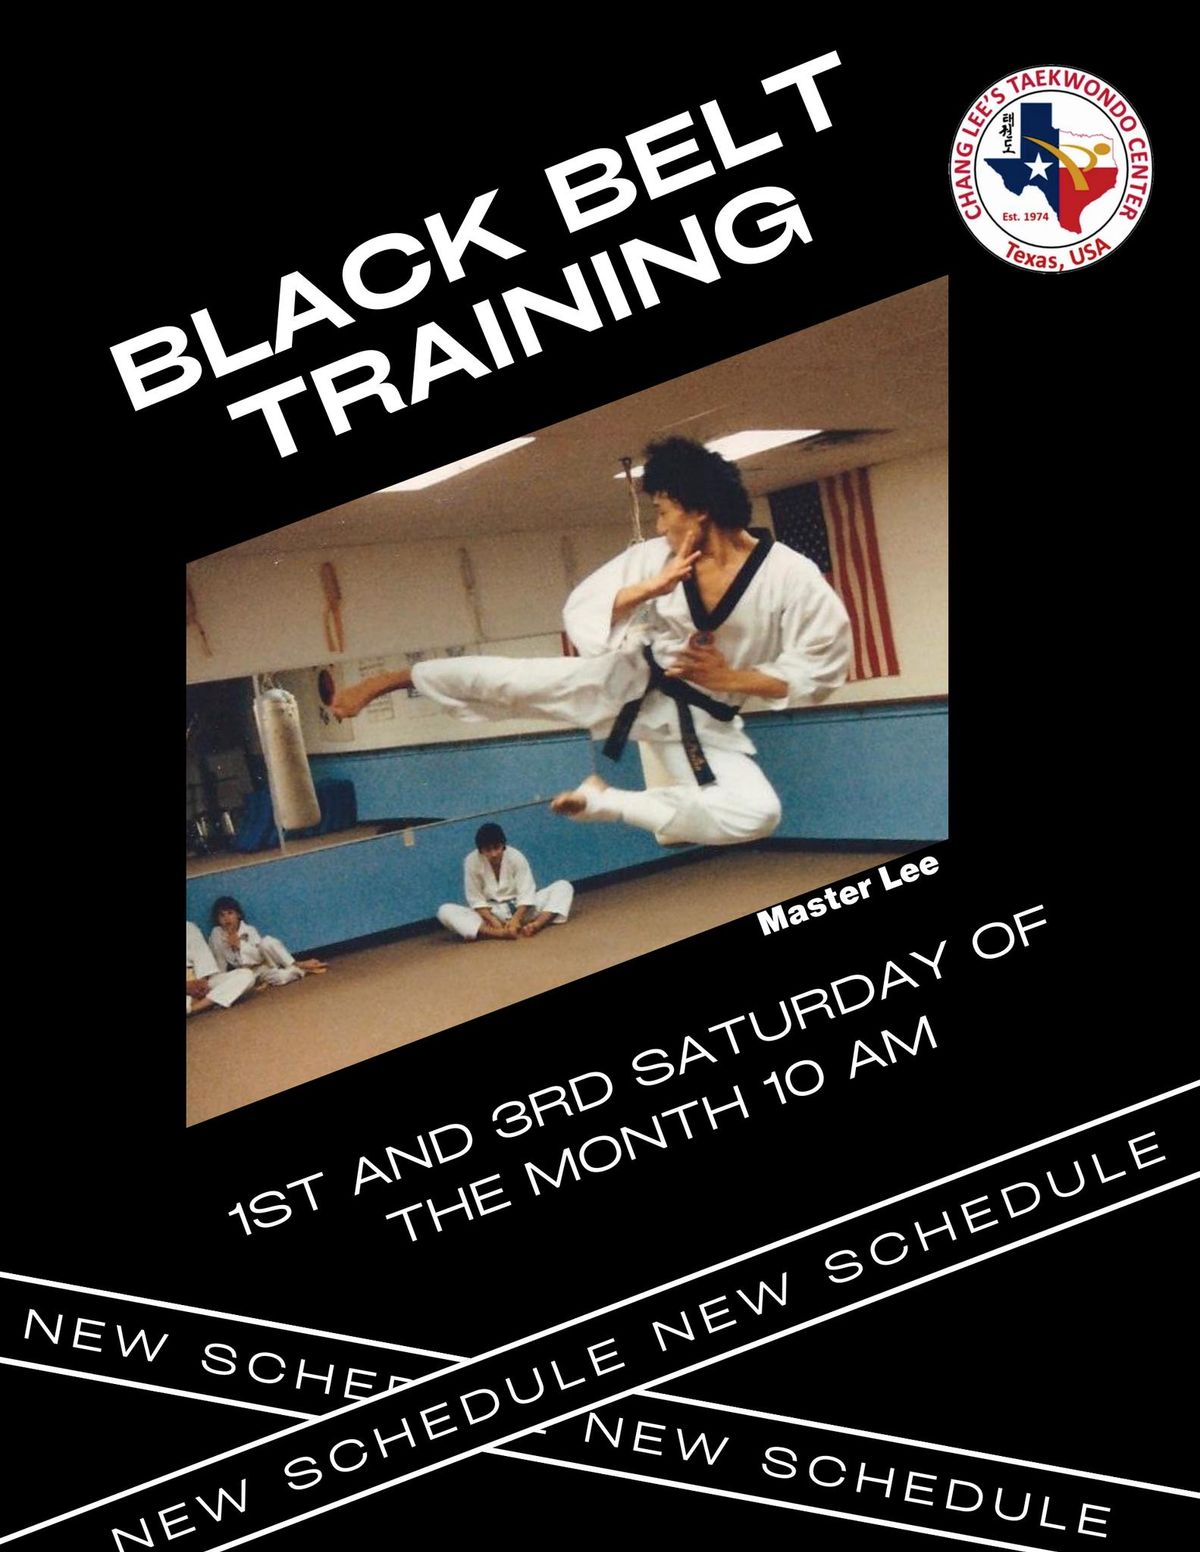 Black Belt Training 